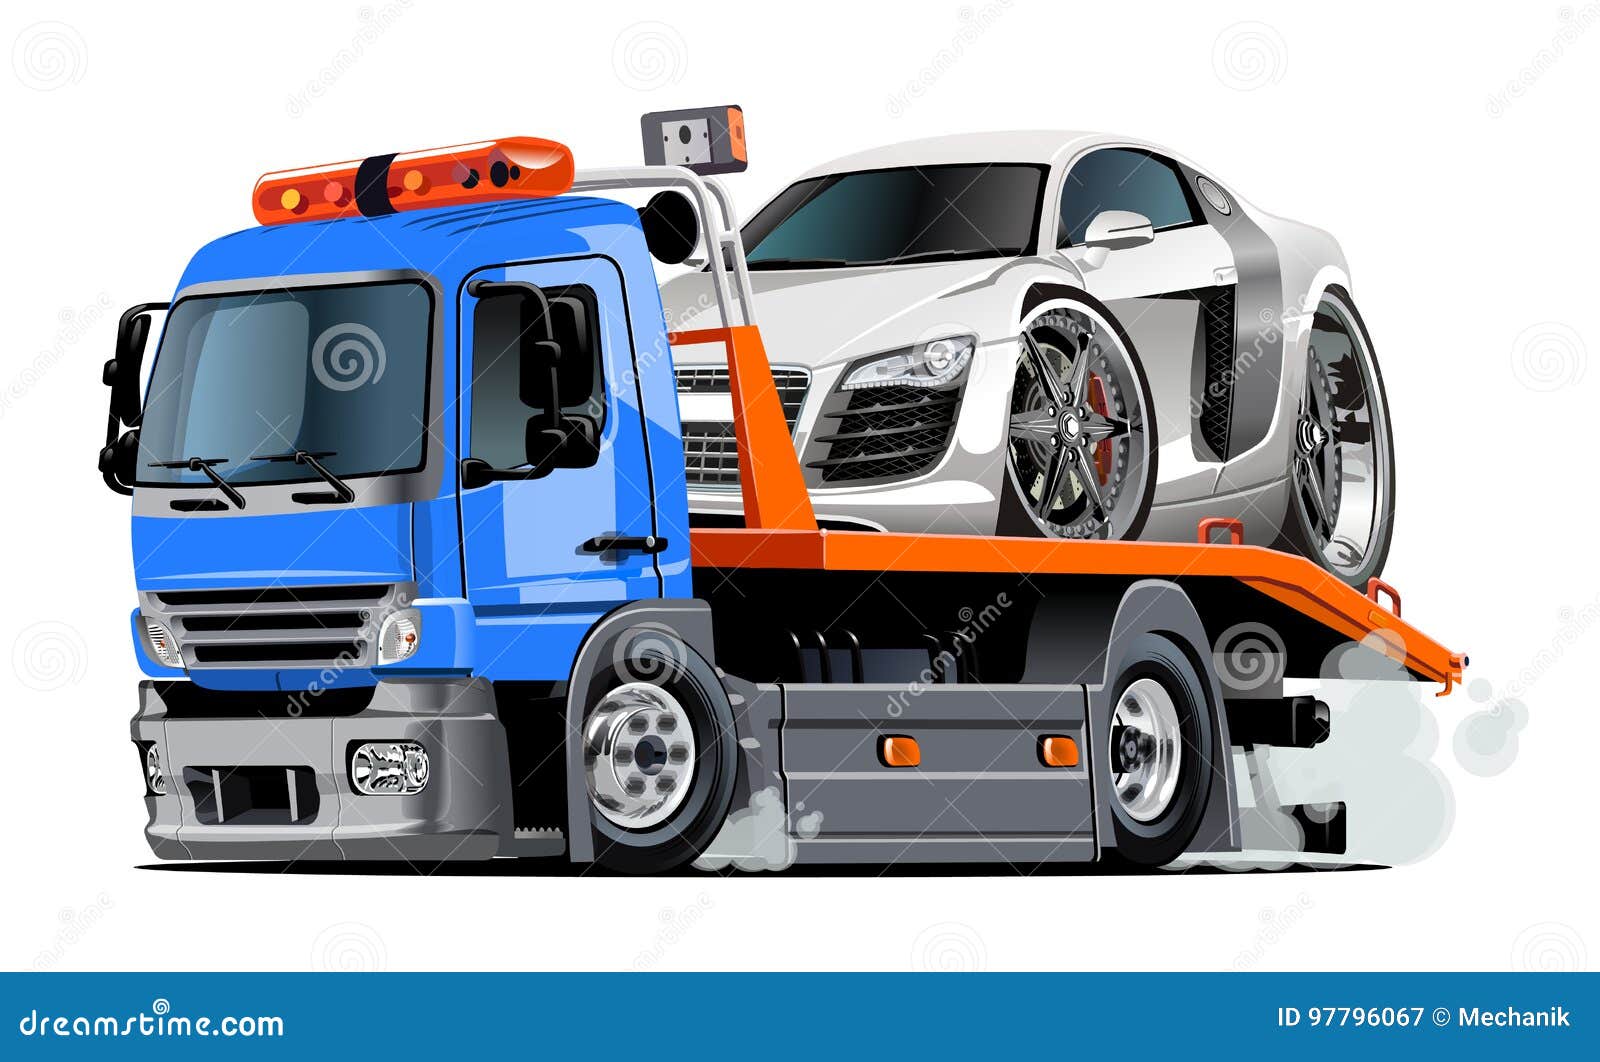 Cartoon tow truck stock vector. Illustration of repairing - 97796067